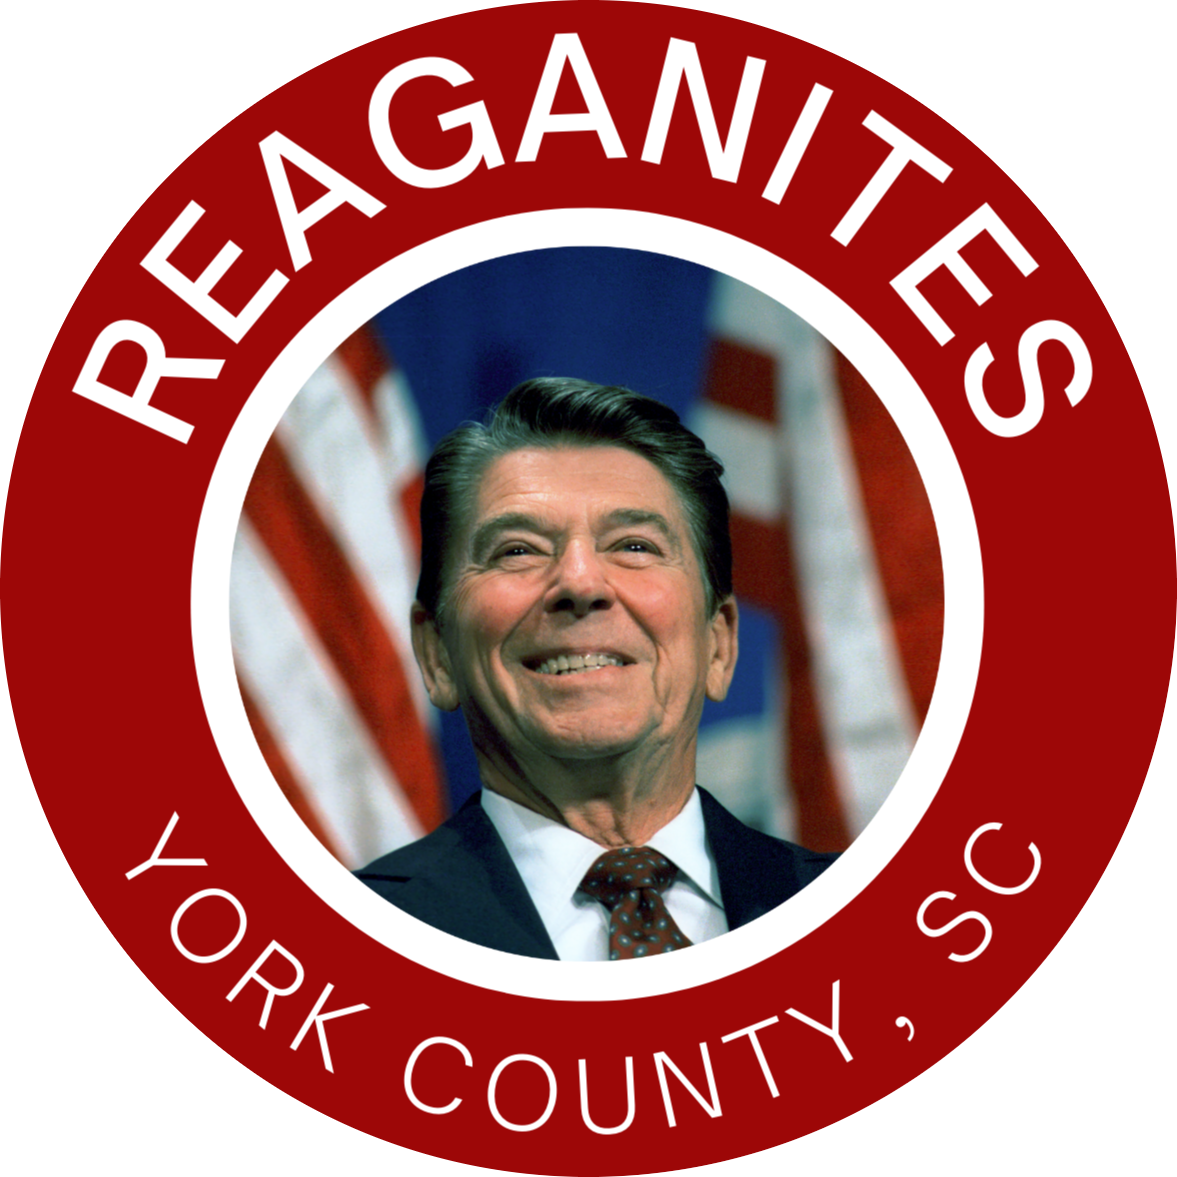 https://reaganites.com/wp-content/uploads/2022/05/Copy-of-Copy-of-reaganites-logo-modified.png